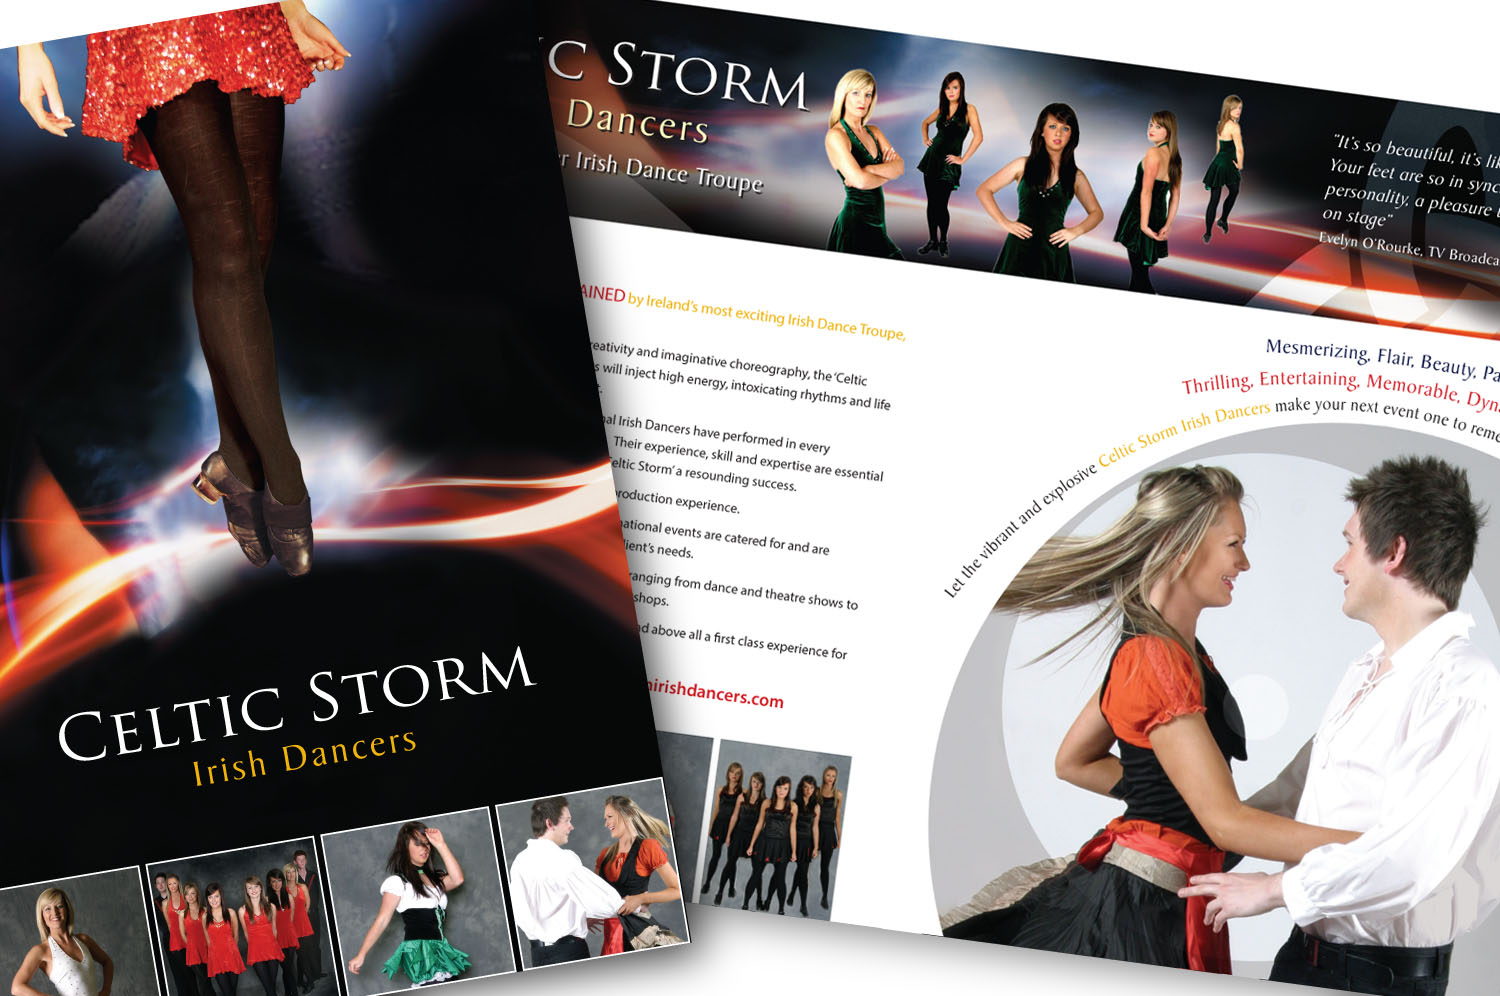  Design of promotional brochure for Celtic Storm, Co. Down  